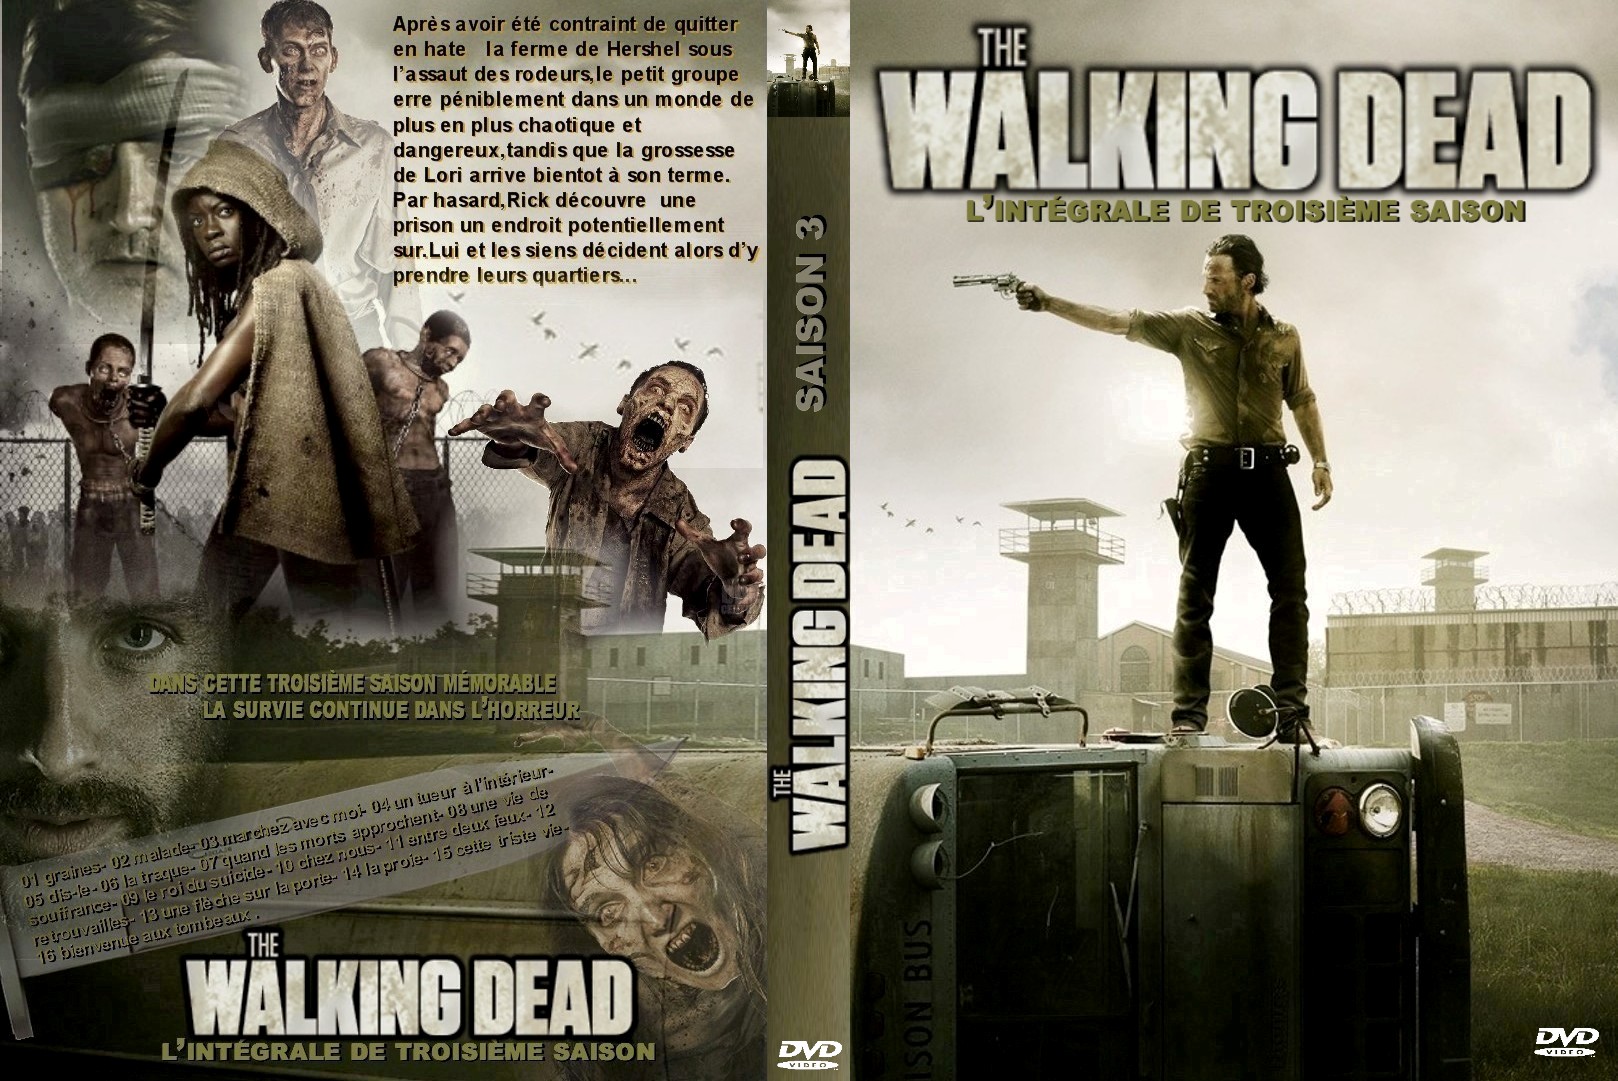 Jaquette Dvd The Walking Dead Saison Custom